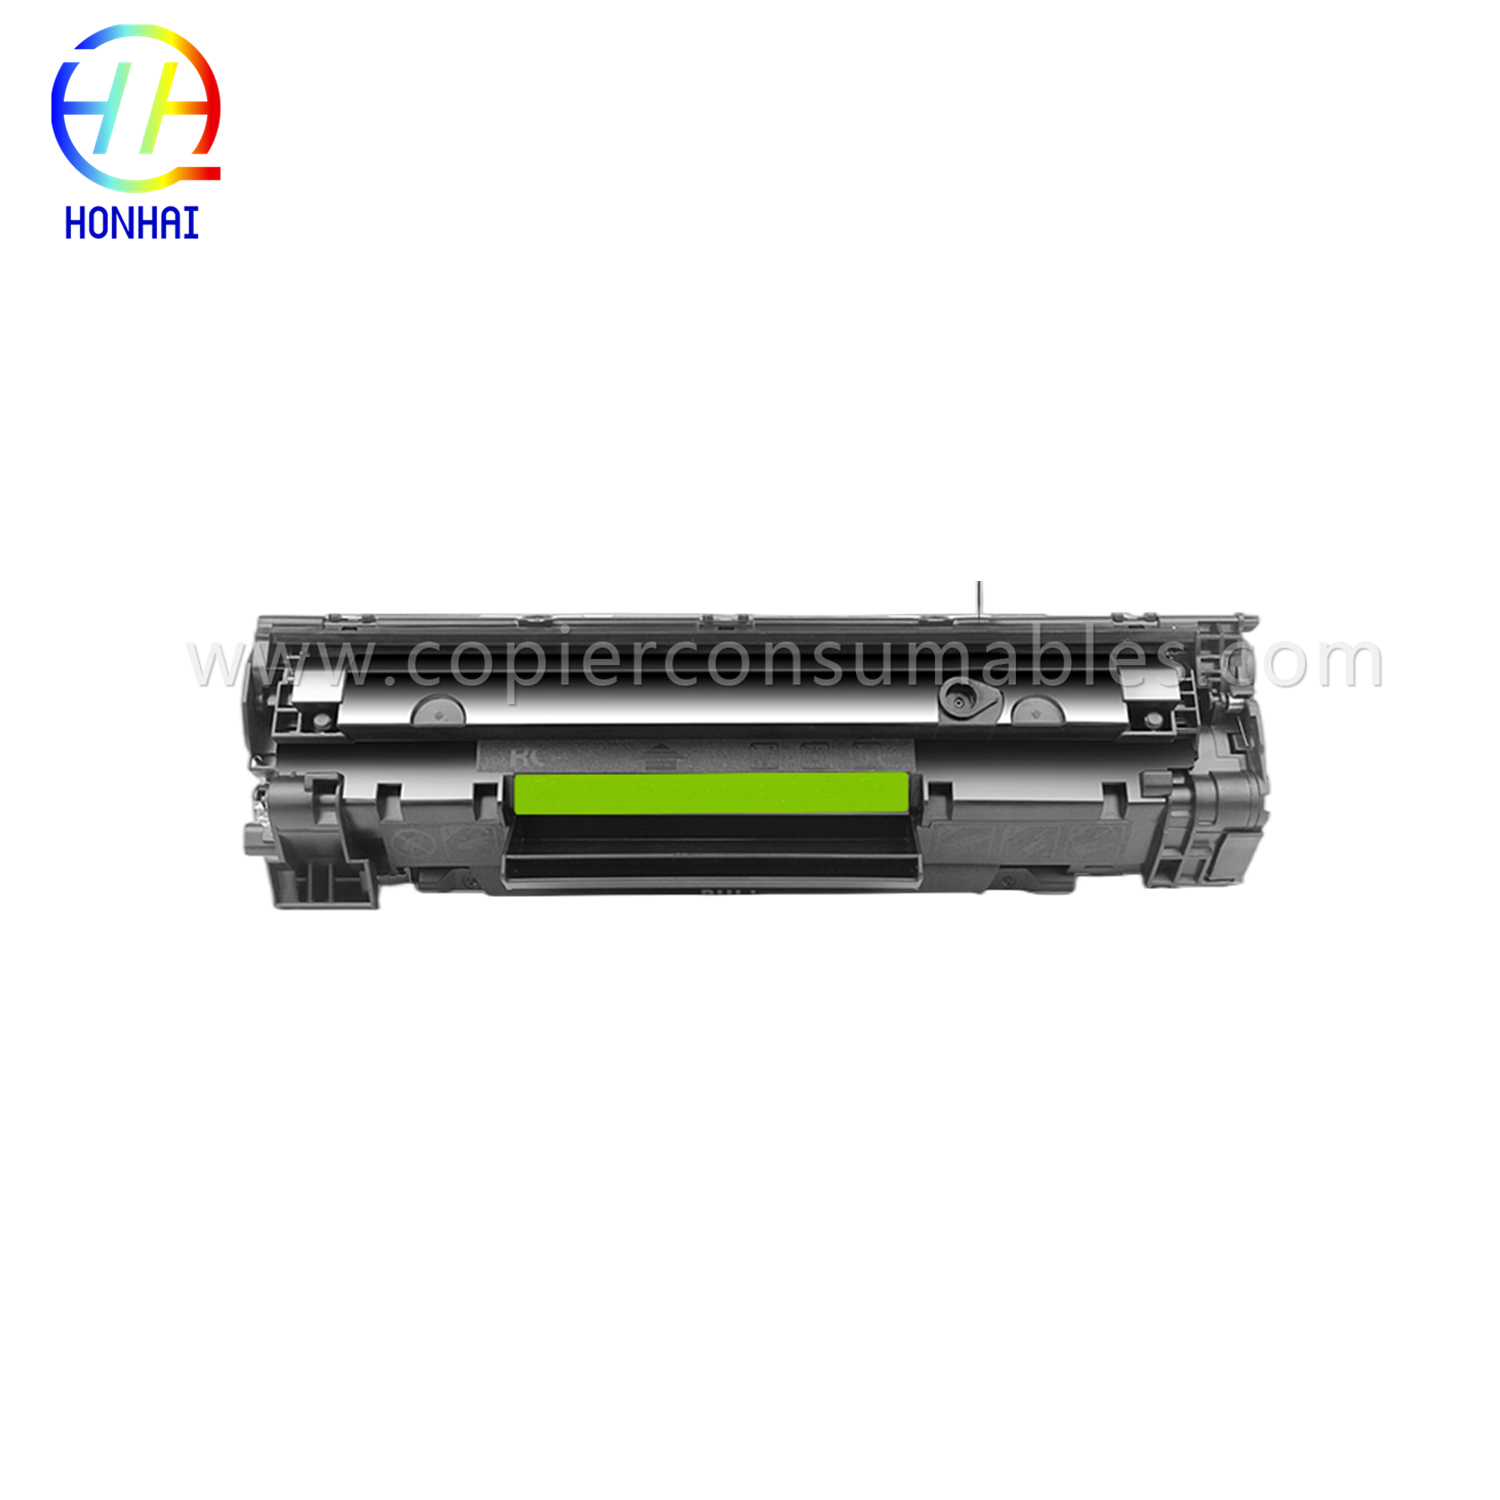 Kartrij Toner untuk HP Laserjet P1005 (CB435A 35A) OEM